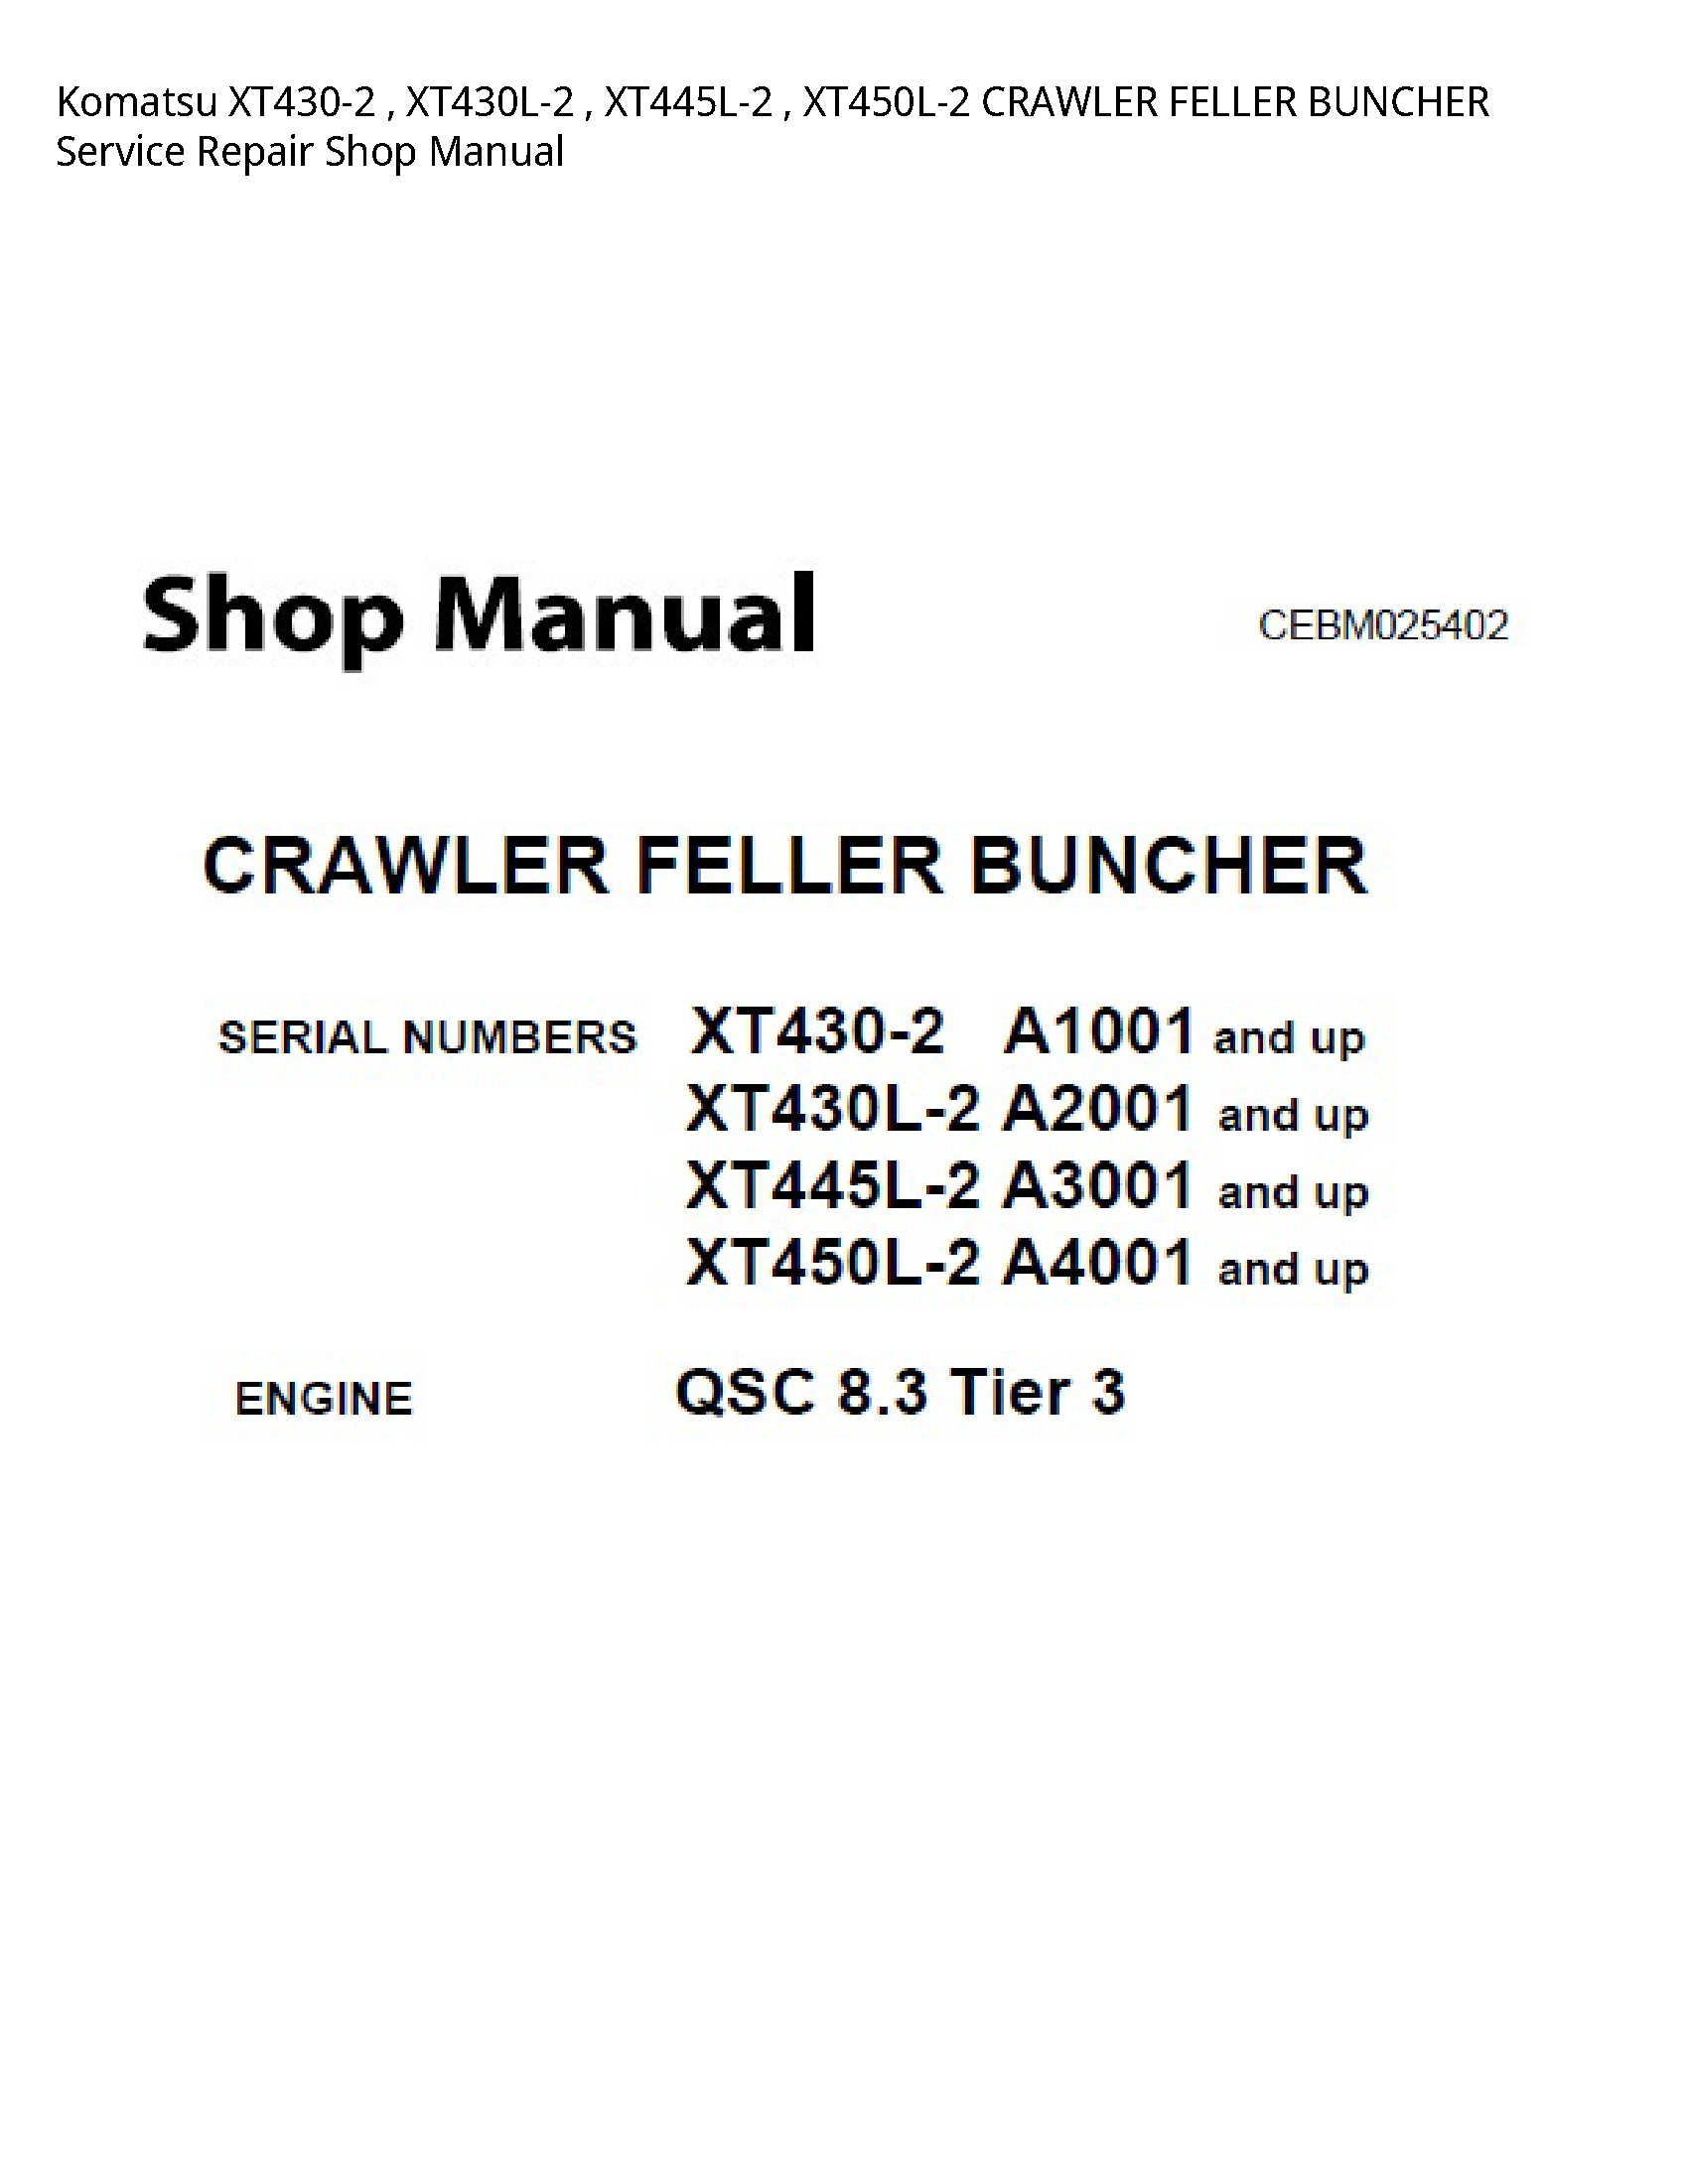 KOMATSU XT430-2 CRAWLER FELLER BUNCHER manual